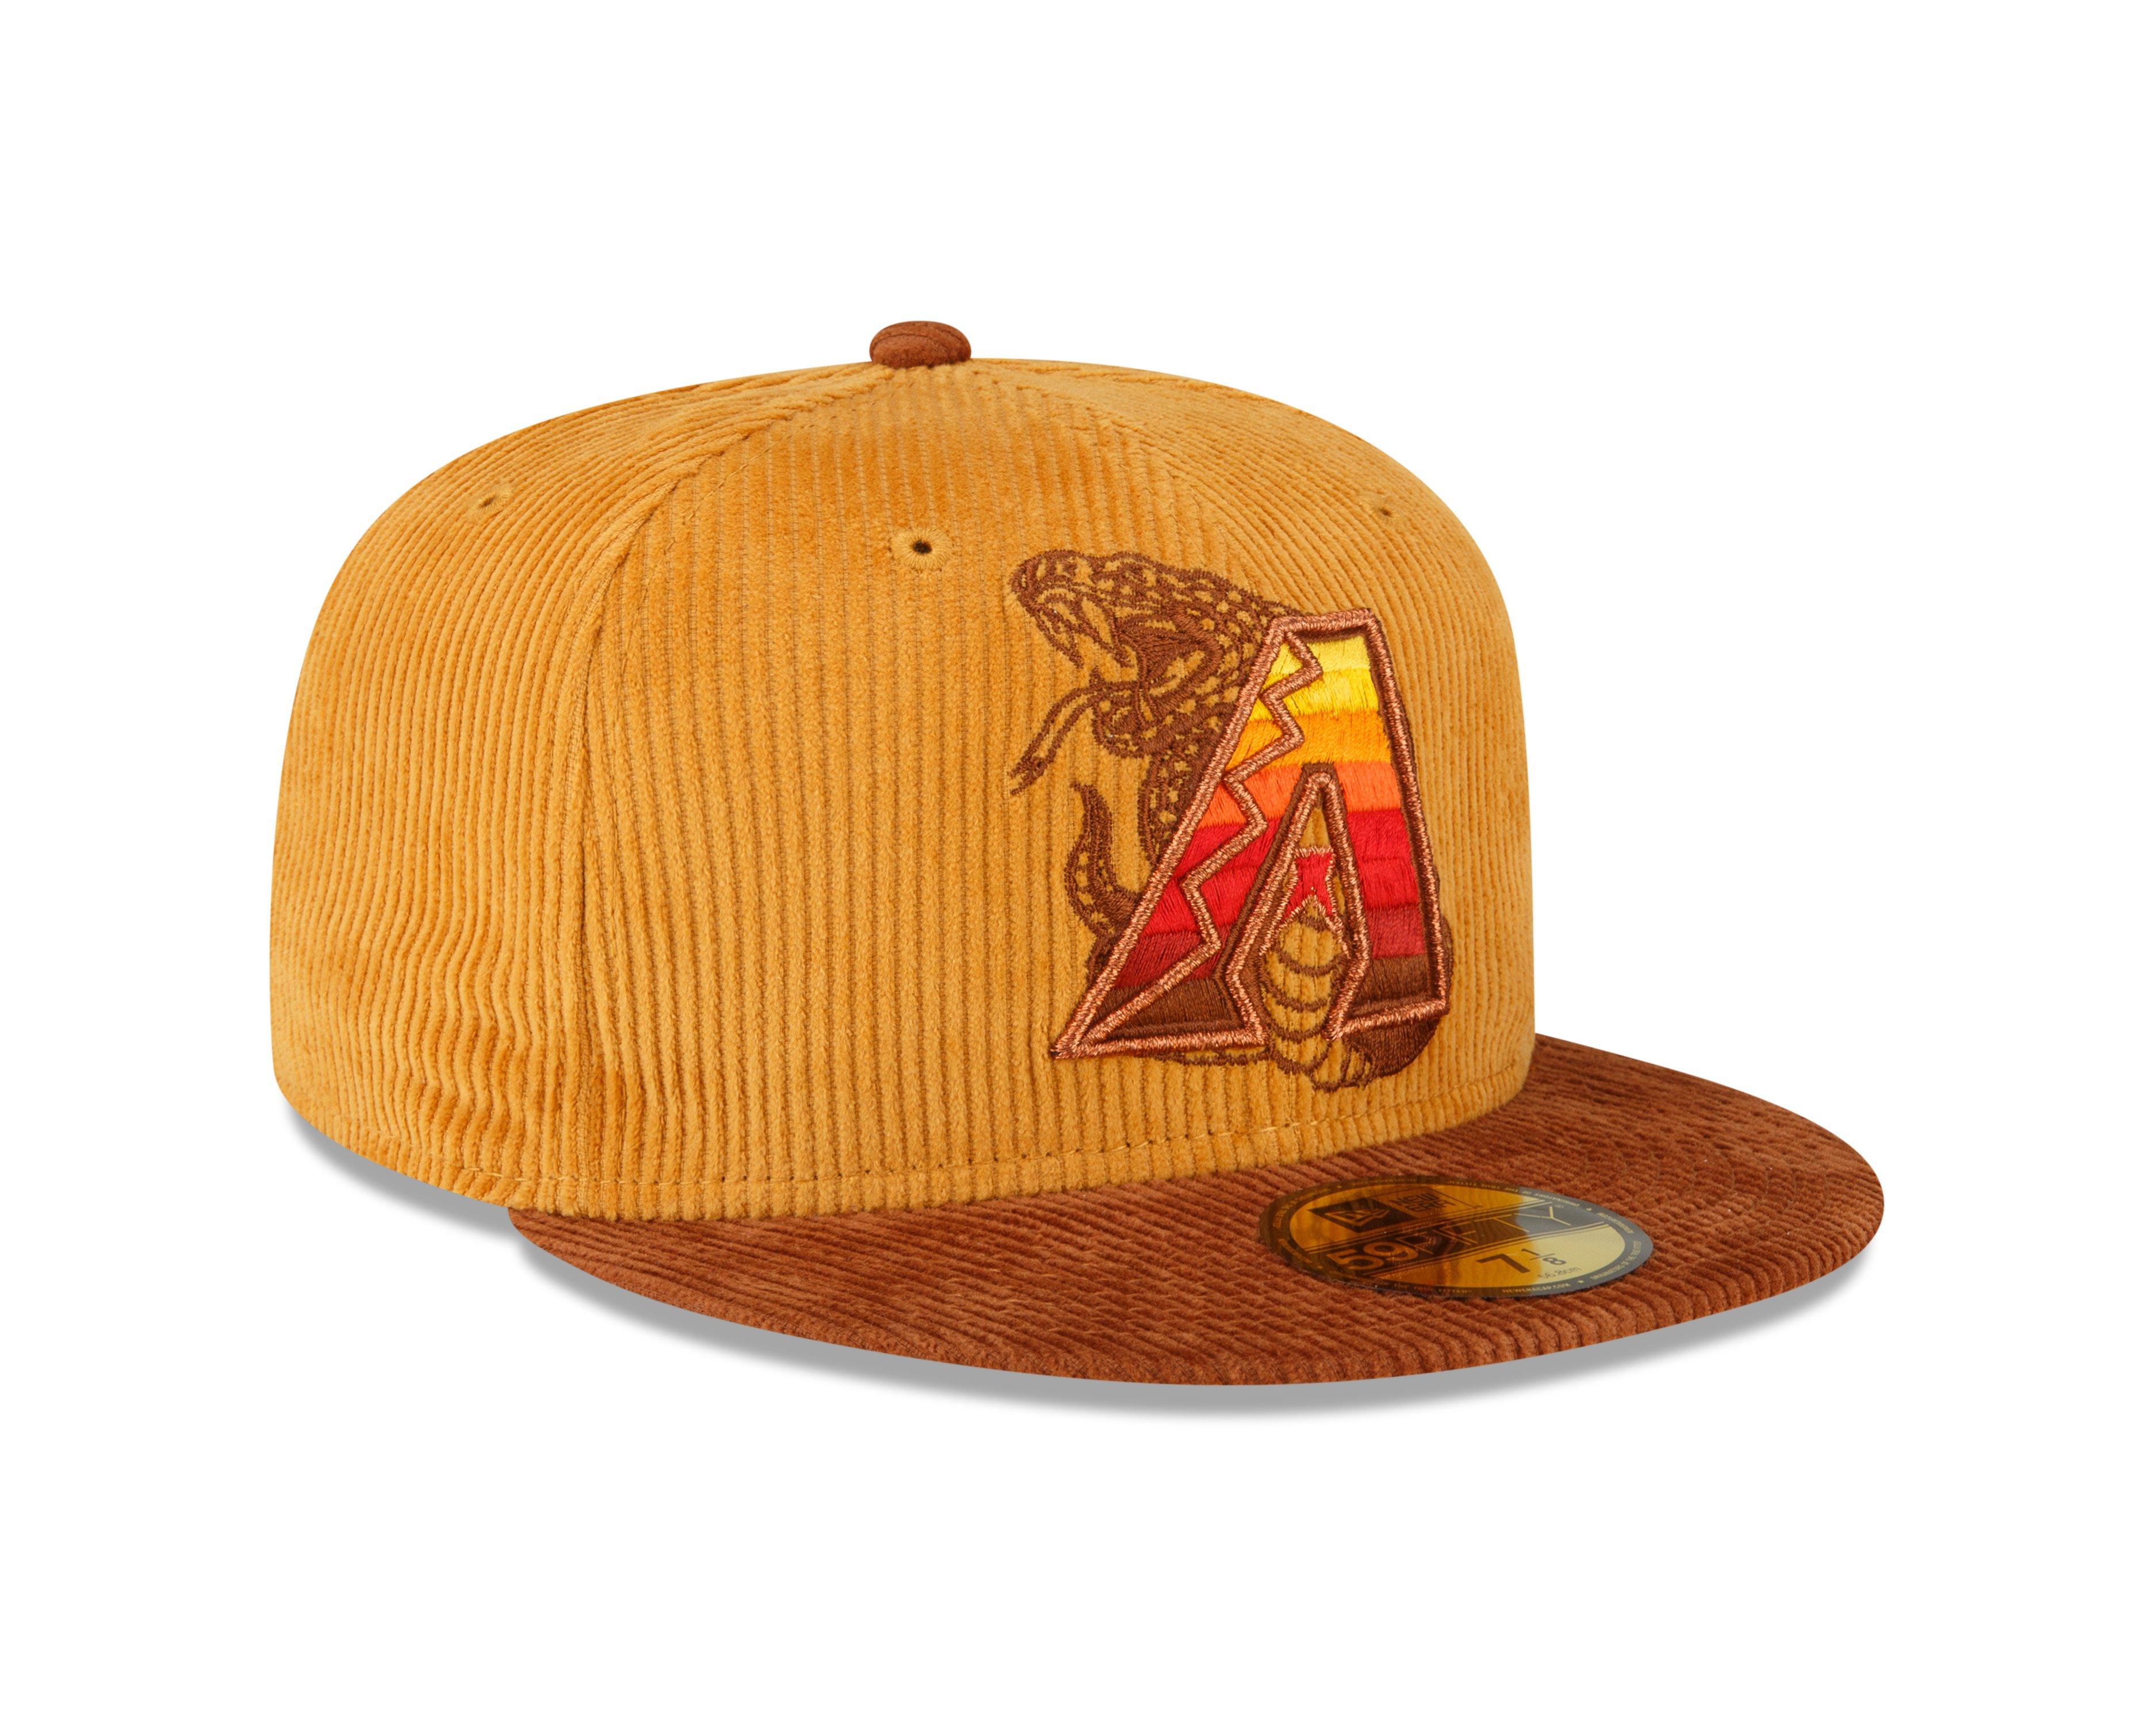 New Era 59FIFTY Arizona Diamondbacks Retro City Original Official Team Colors Fitted Hat